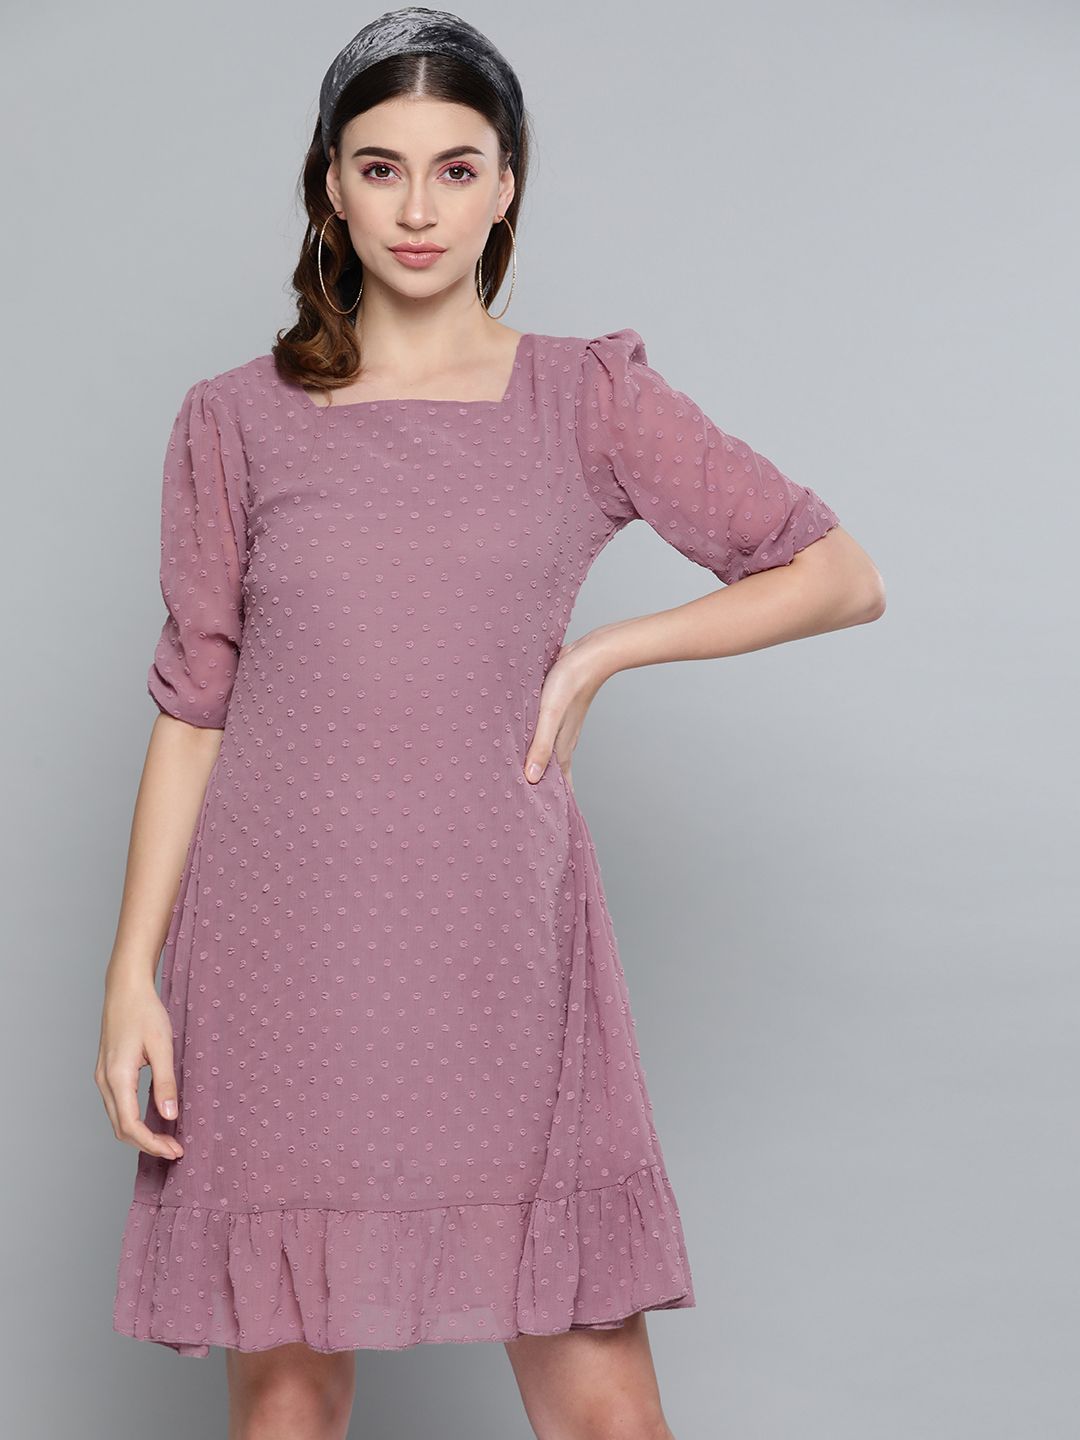 SASSAFRAS Mauve Dobby Weave A-Line Dress Price in India